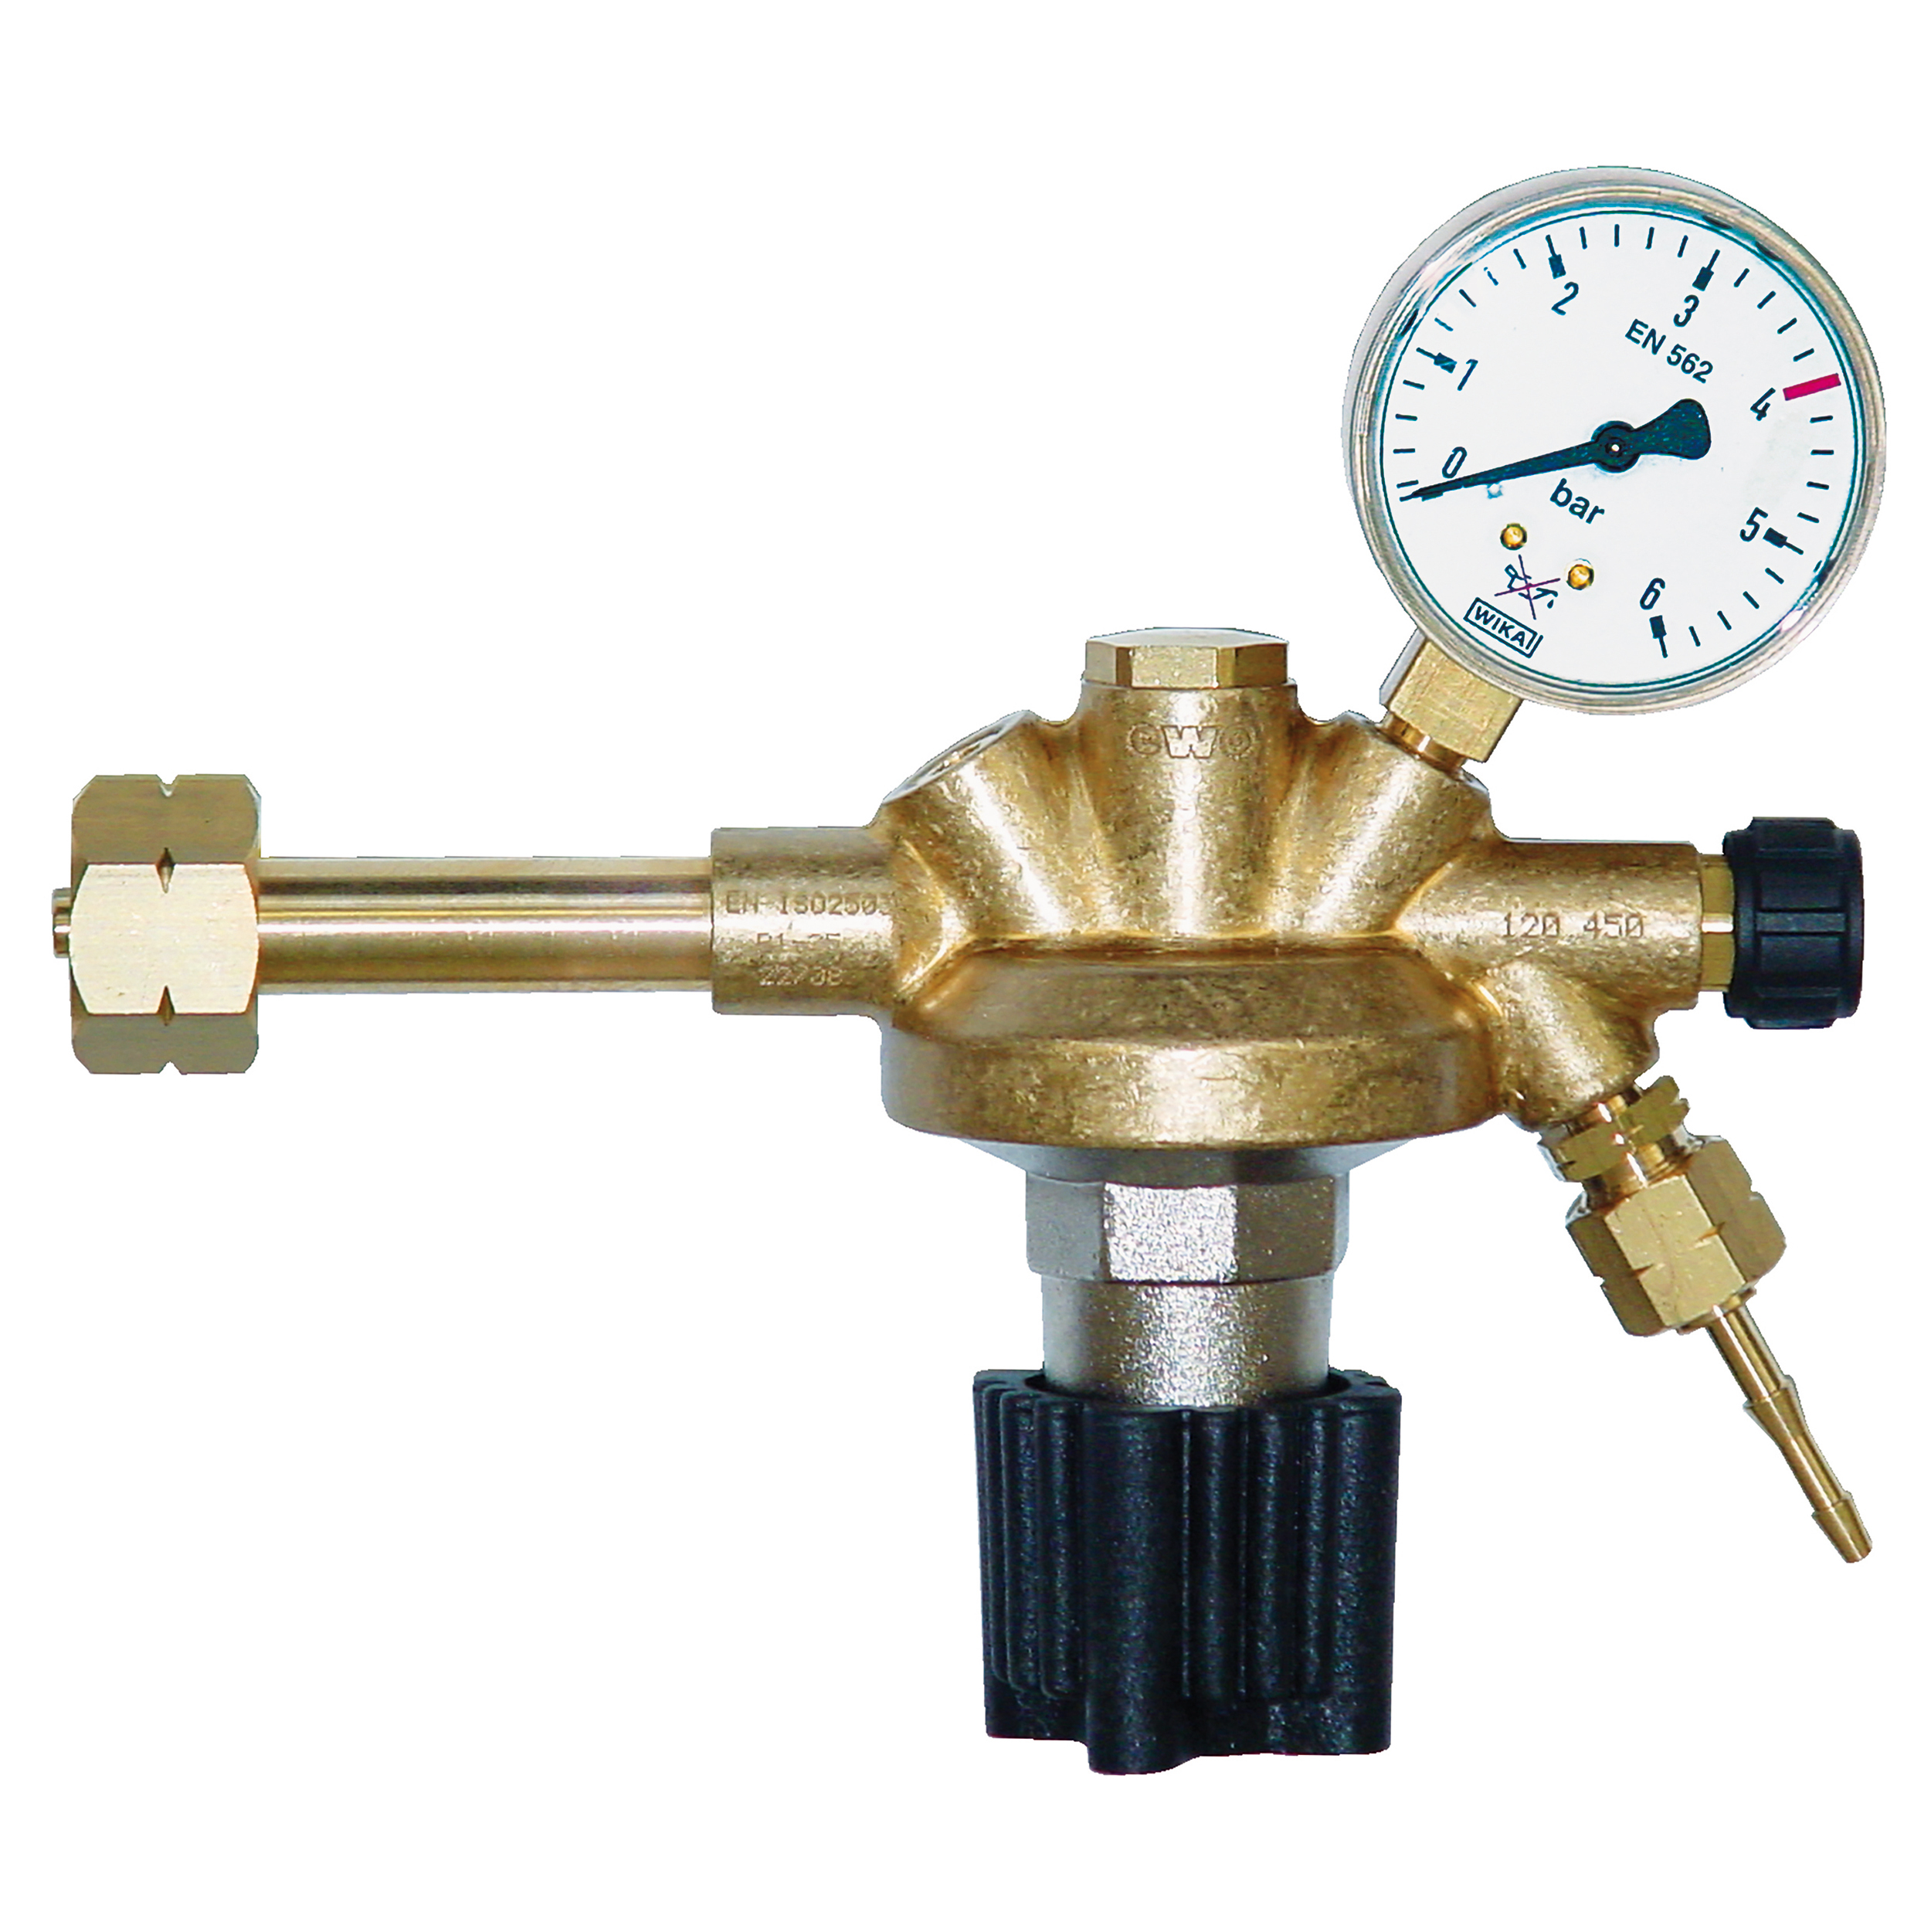 Propane pressure regulator, adjustable